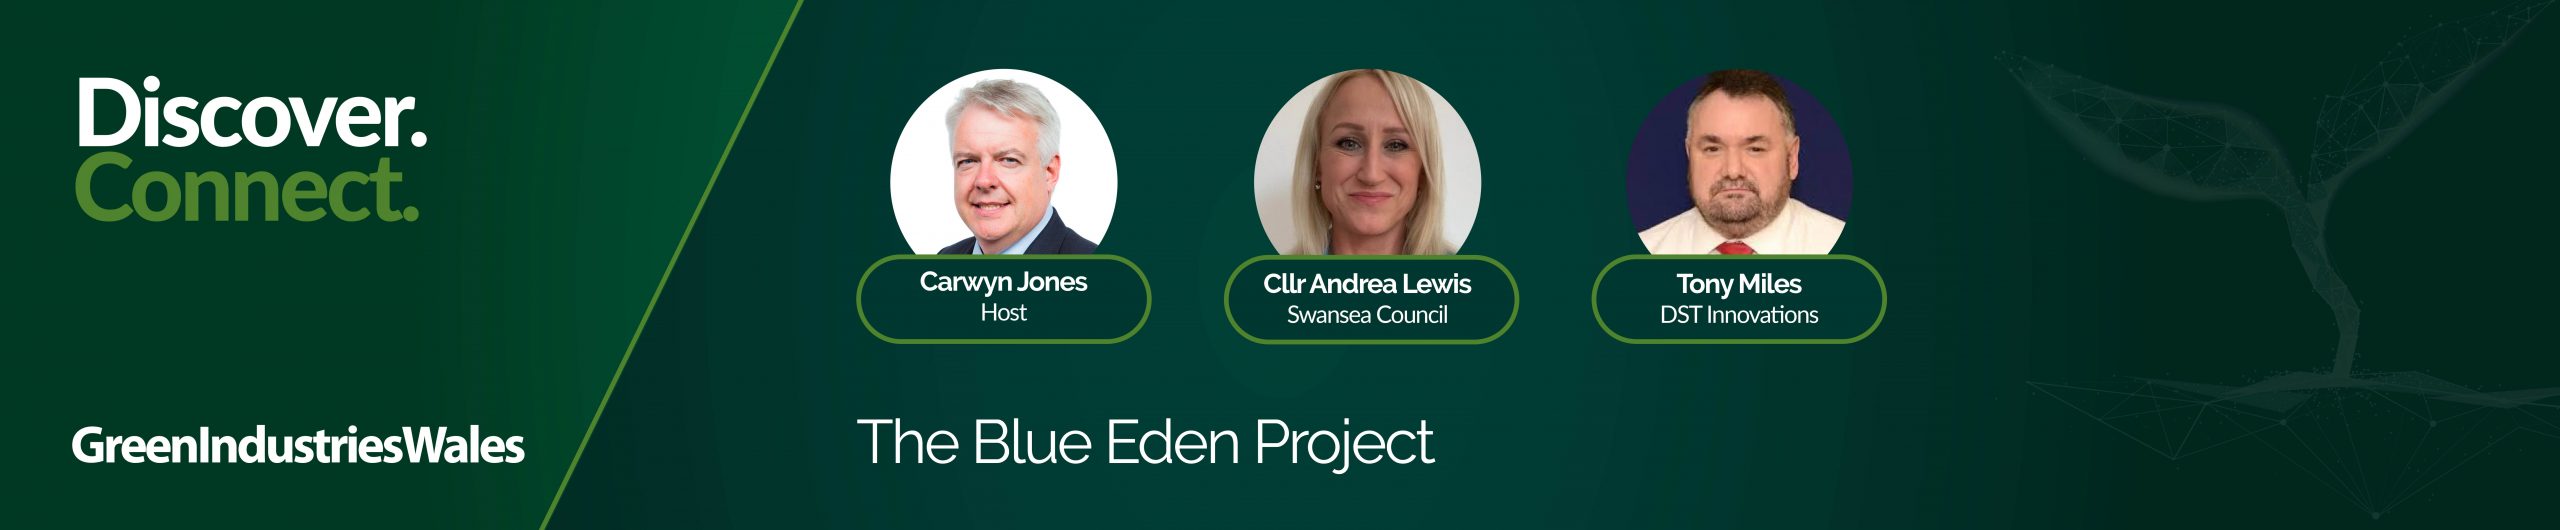 The Blue Eden Project